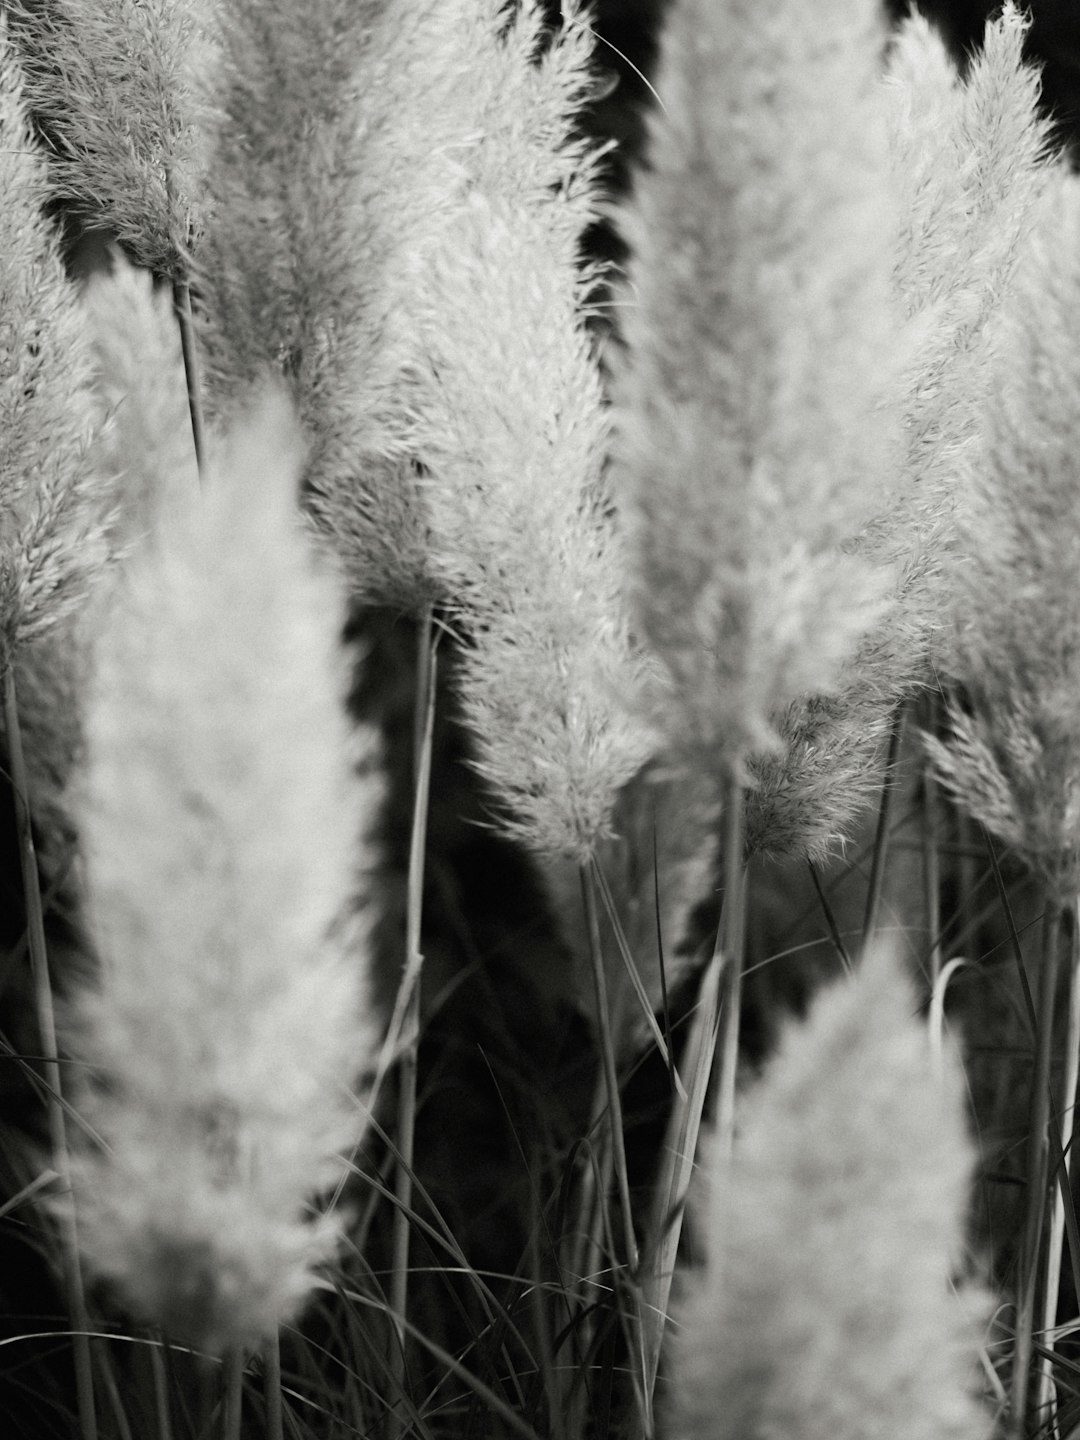 white fur textile on brown grass